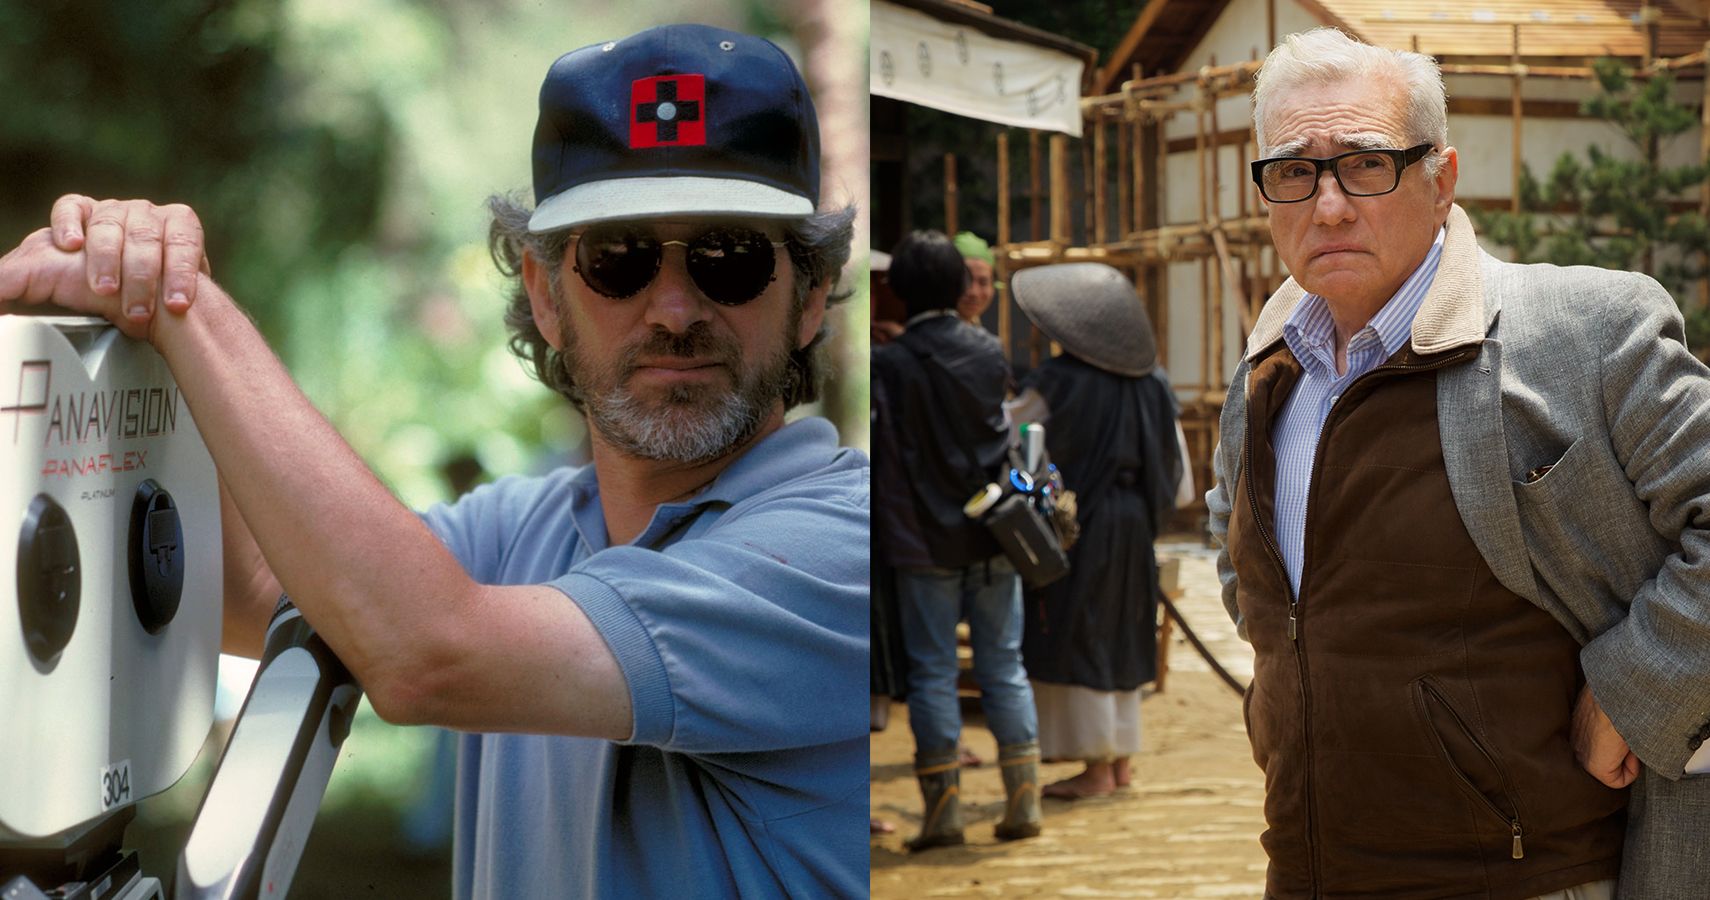 Spielberg Vs Scorsese Spielbergs Top 5 Movies & Scorseses Top 5 Movies Ranked (According To IMDb)